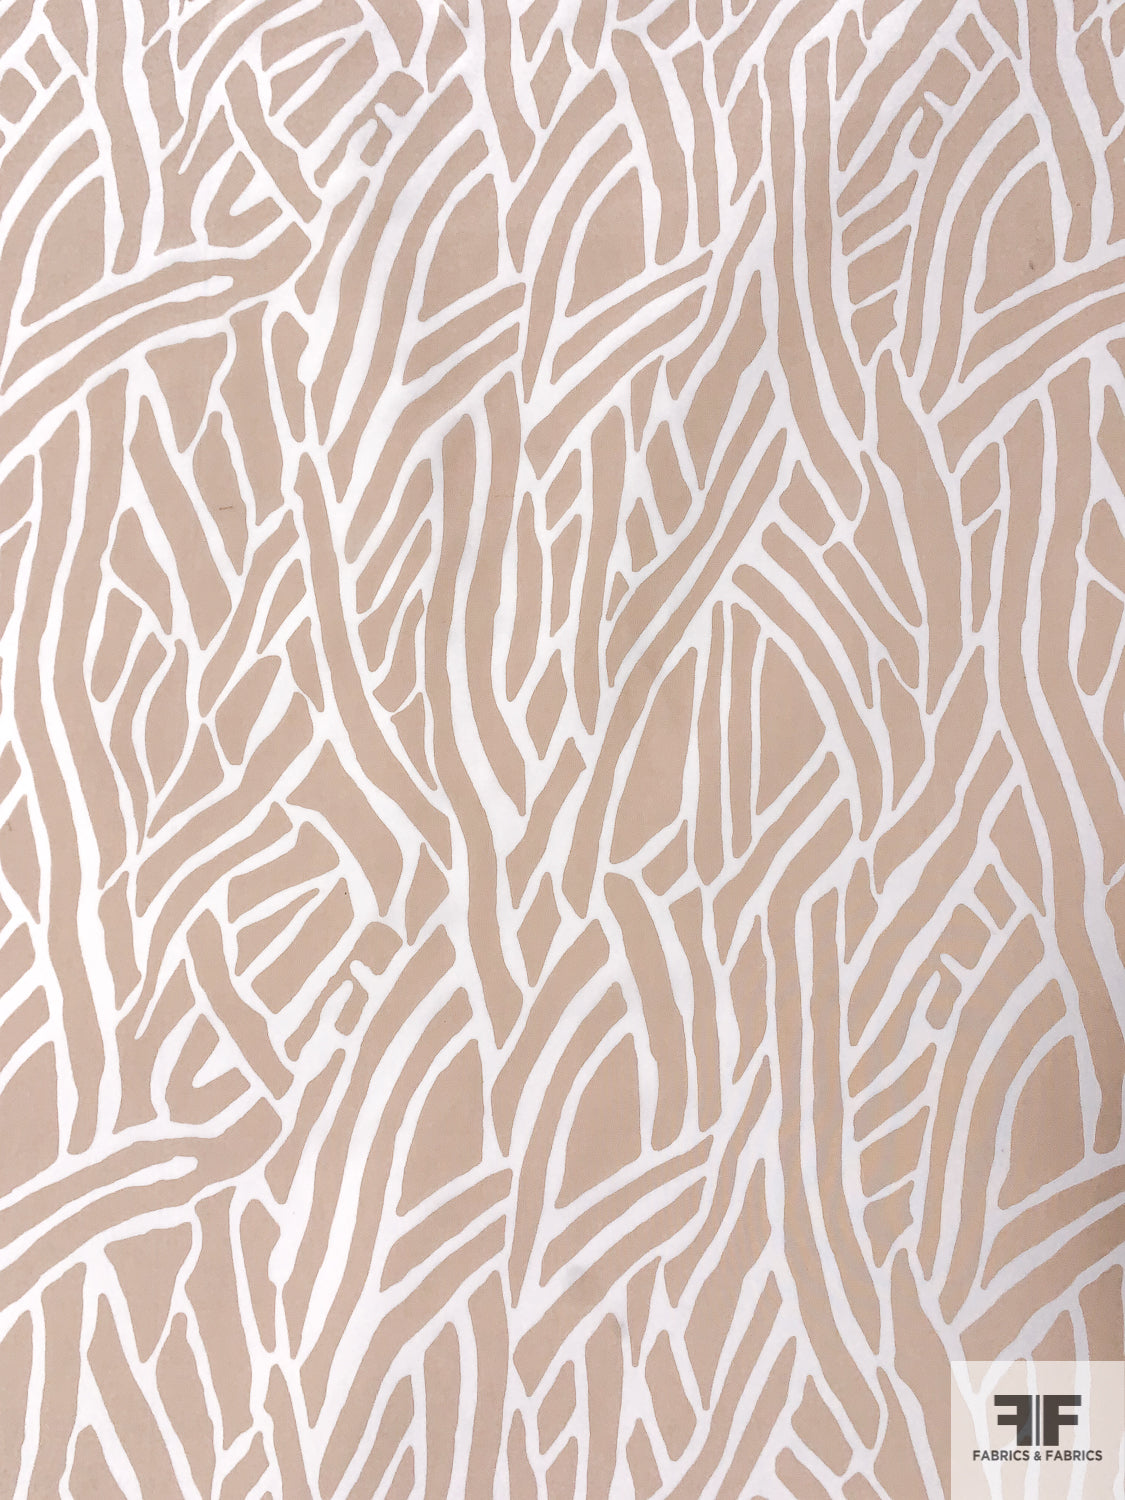 Intertwined Branch Graphic Printed Silk Crepe de Chine - Nude / White